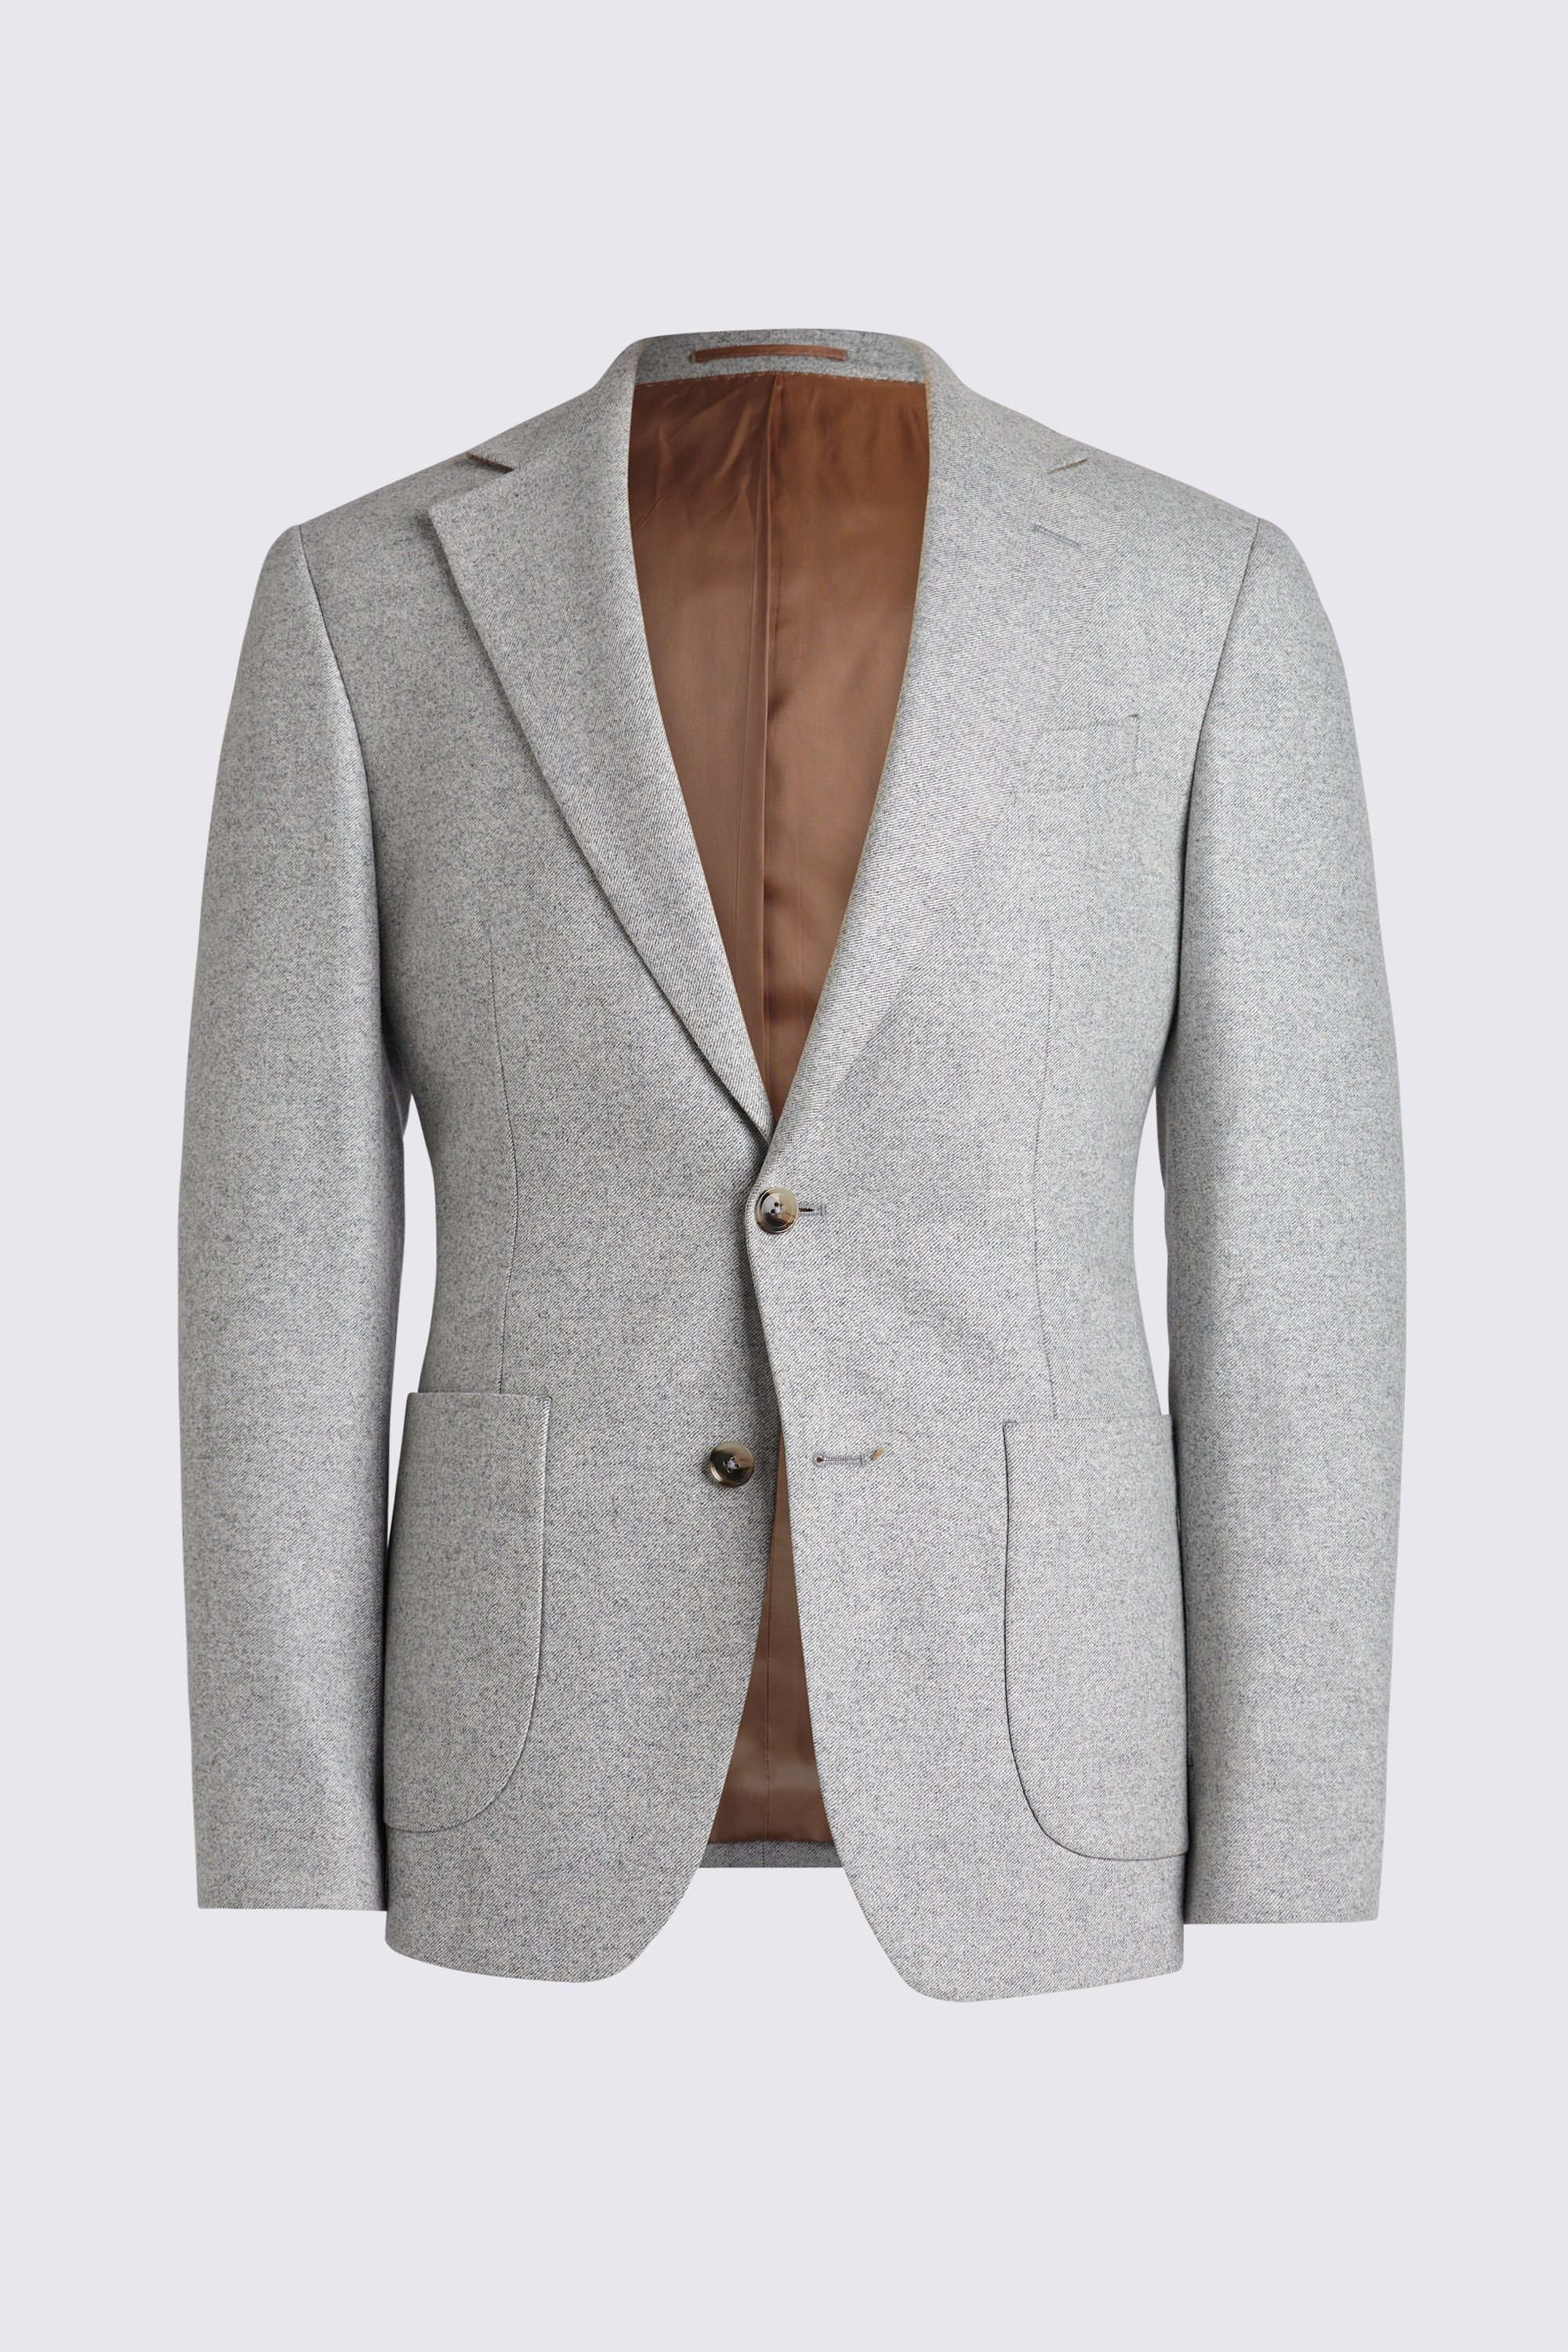 Italian Tailored Light Grey Melange Flannel Jacket | Buy Online at Moss